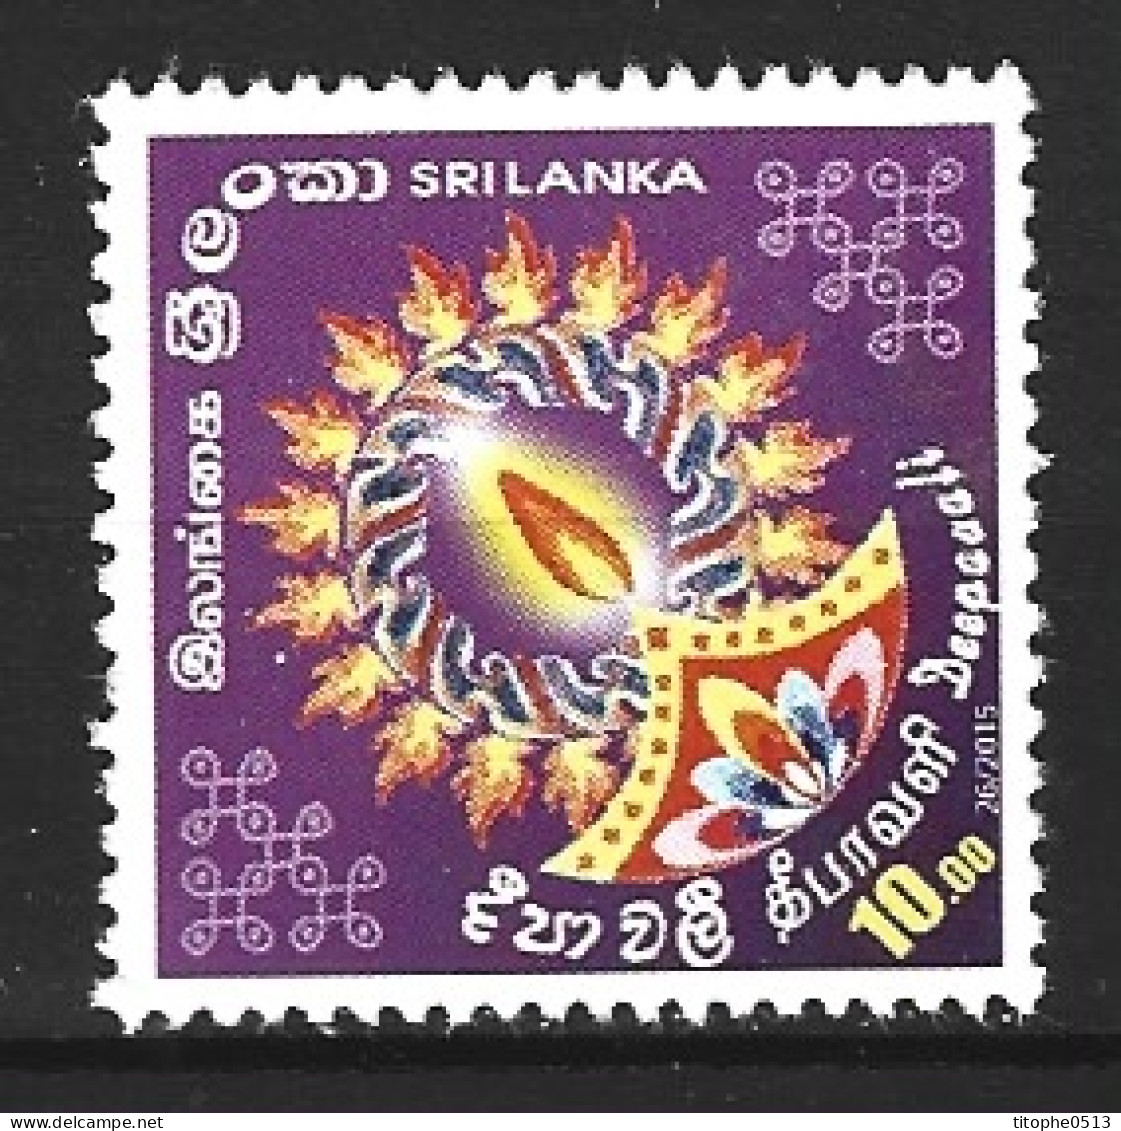 SRI LANKA. N°2000 De 2015. Diwali. - Hinduismus